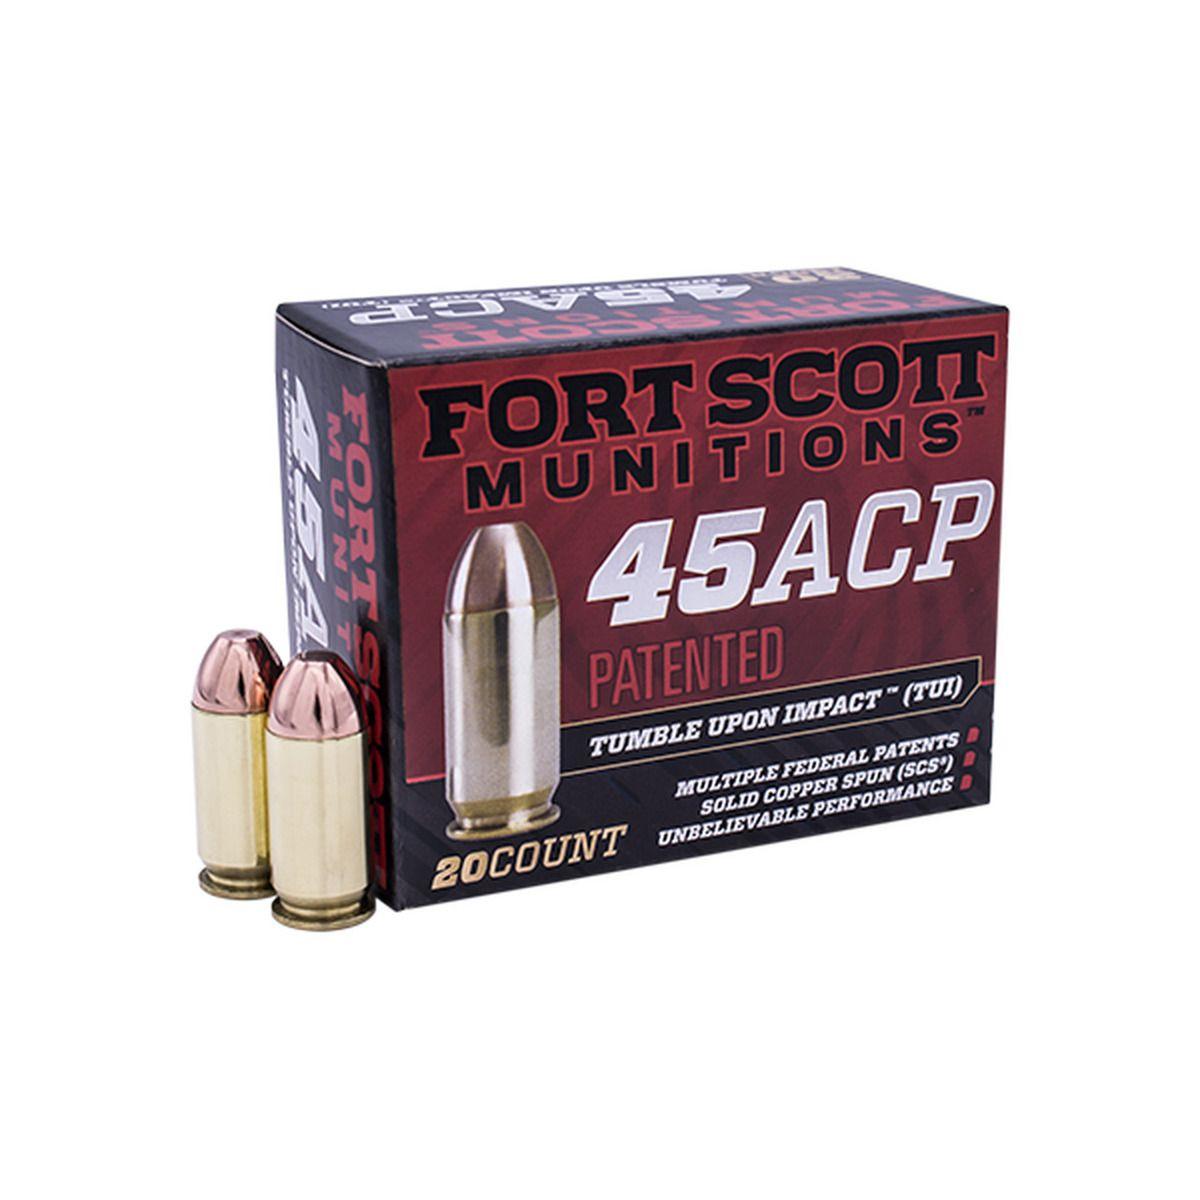  Fort Scott Munitions 450180scv Tumble Upon Impact (Tui) Self Defense 45 Acp 180 Gr Solid Copper Spun (Scs) 20 Per Box/25 Cs